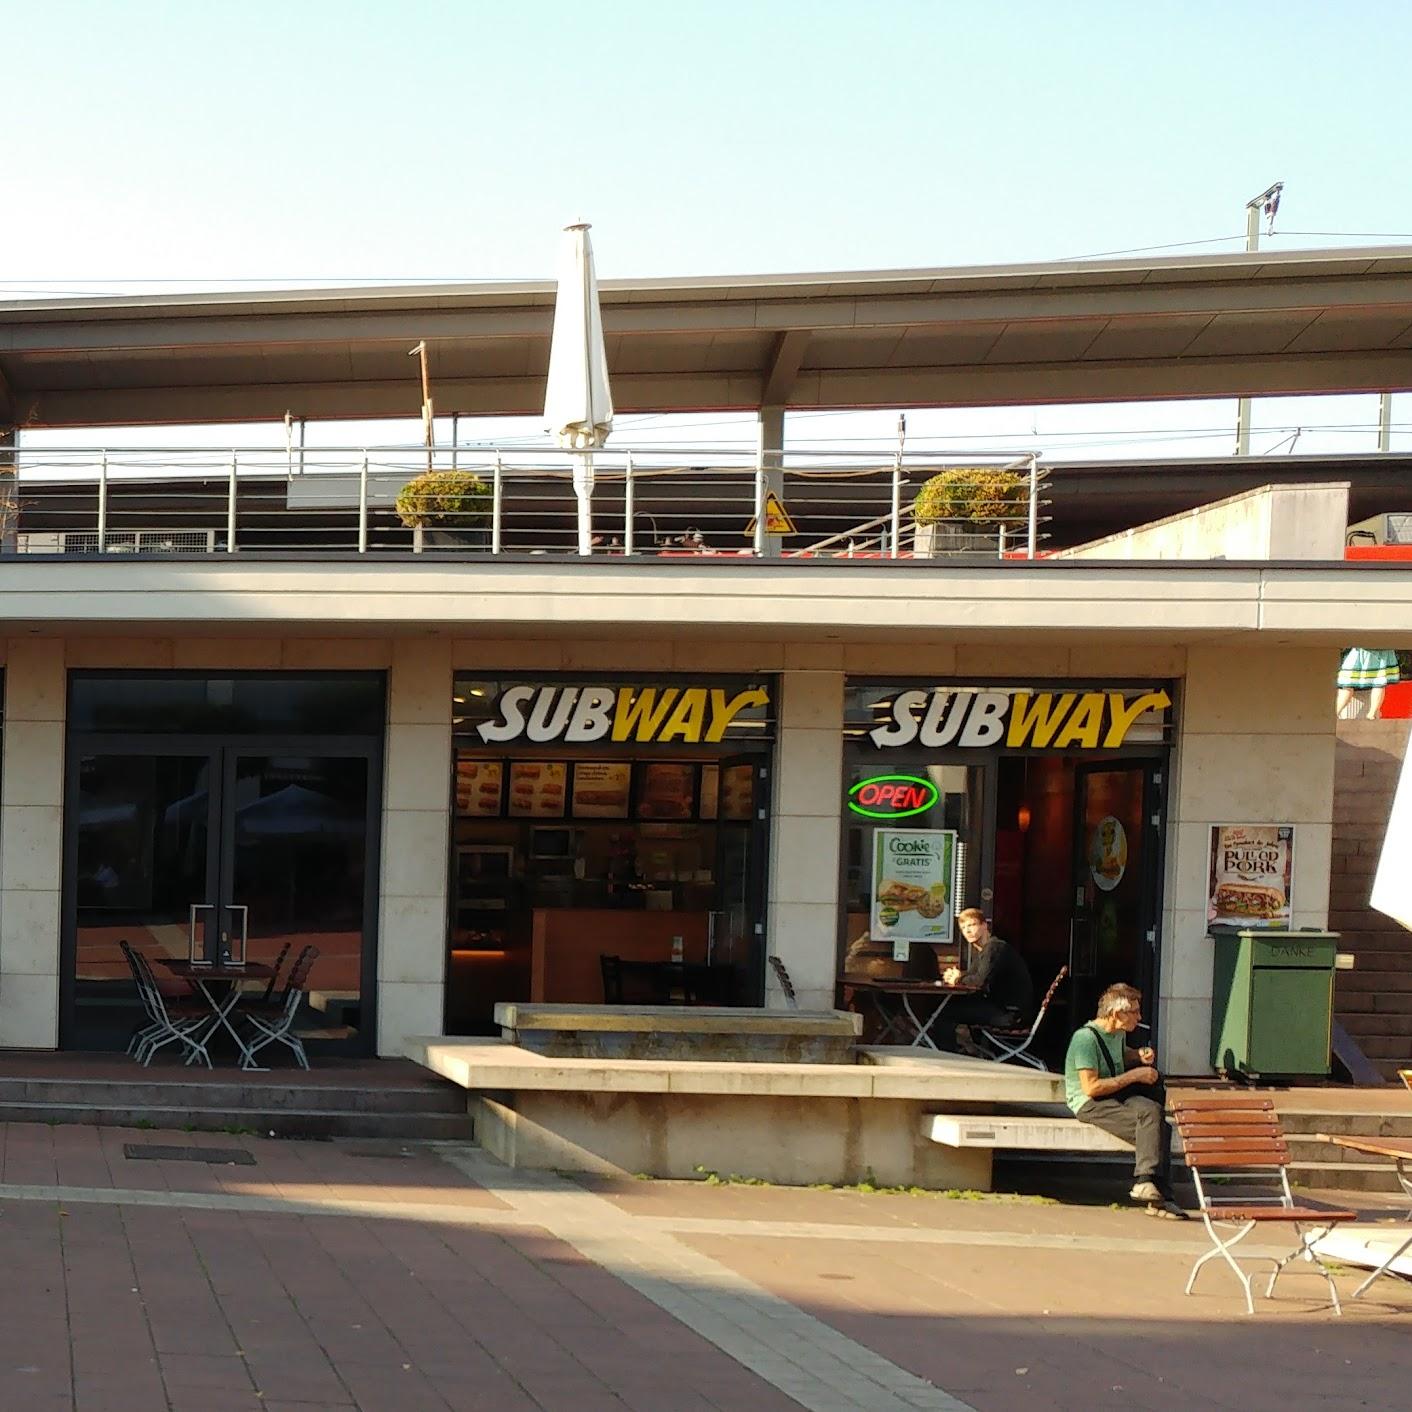 Restaurant "Subway" in Siegburg